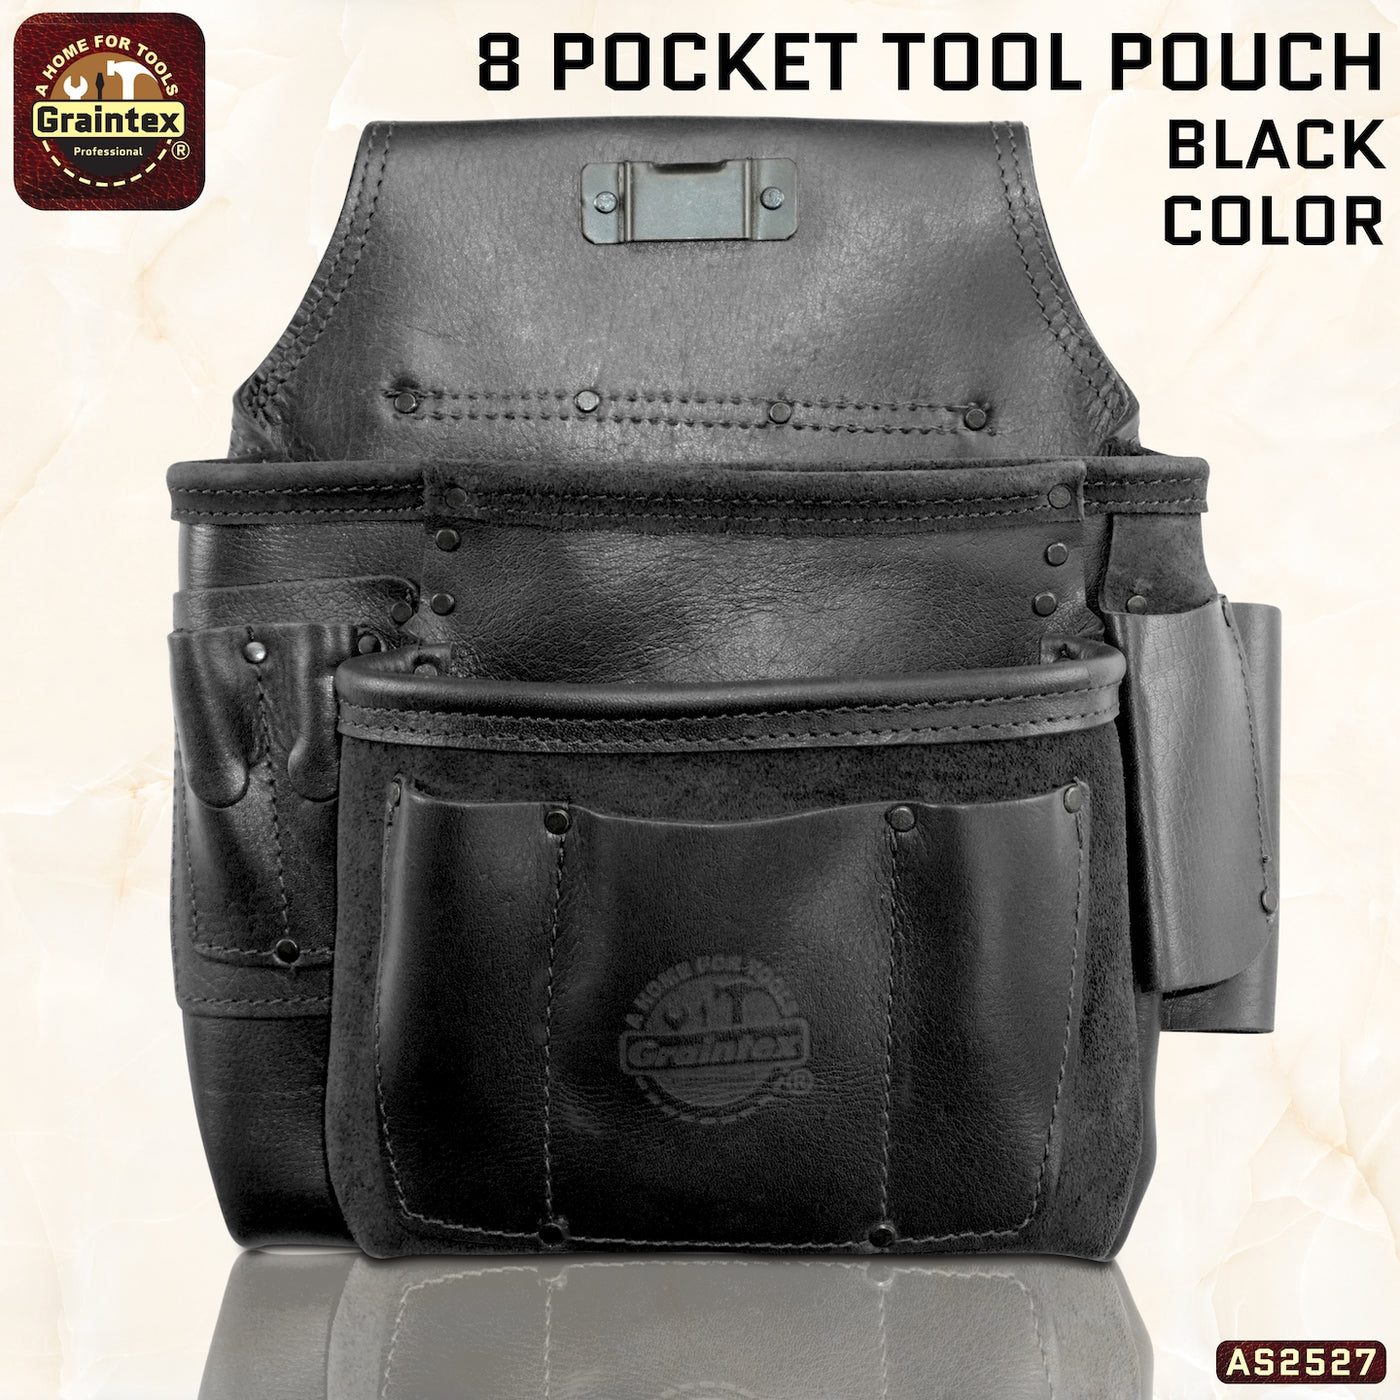 AS2527 :: 8 Pocket Framer’s Tool Pouch Ambassador Series Black Color Top Grain Leather